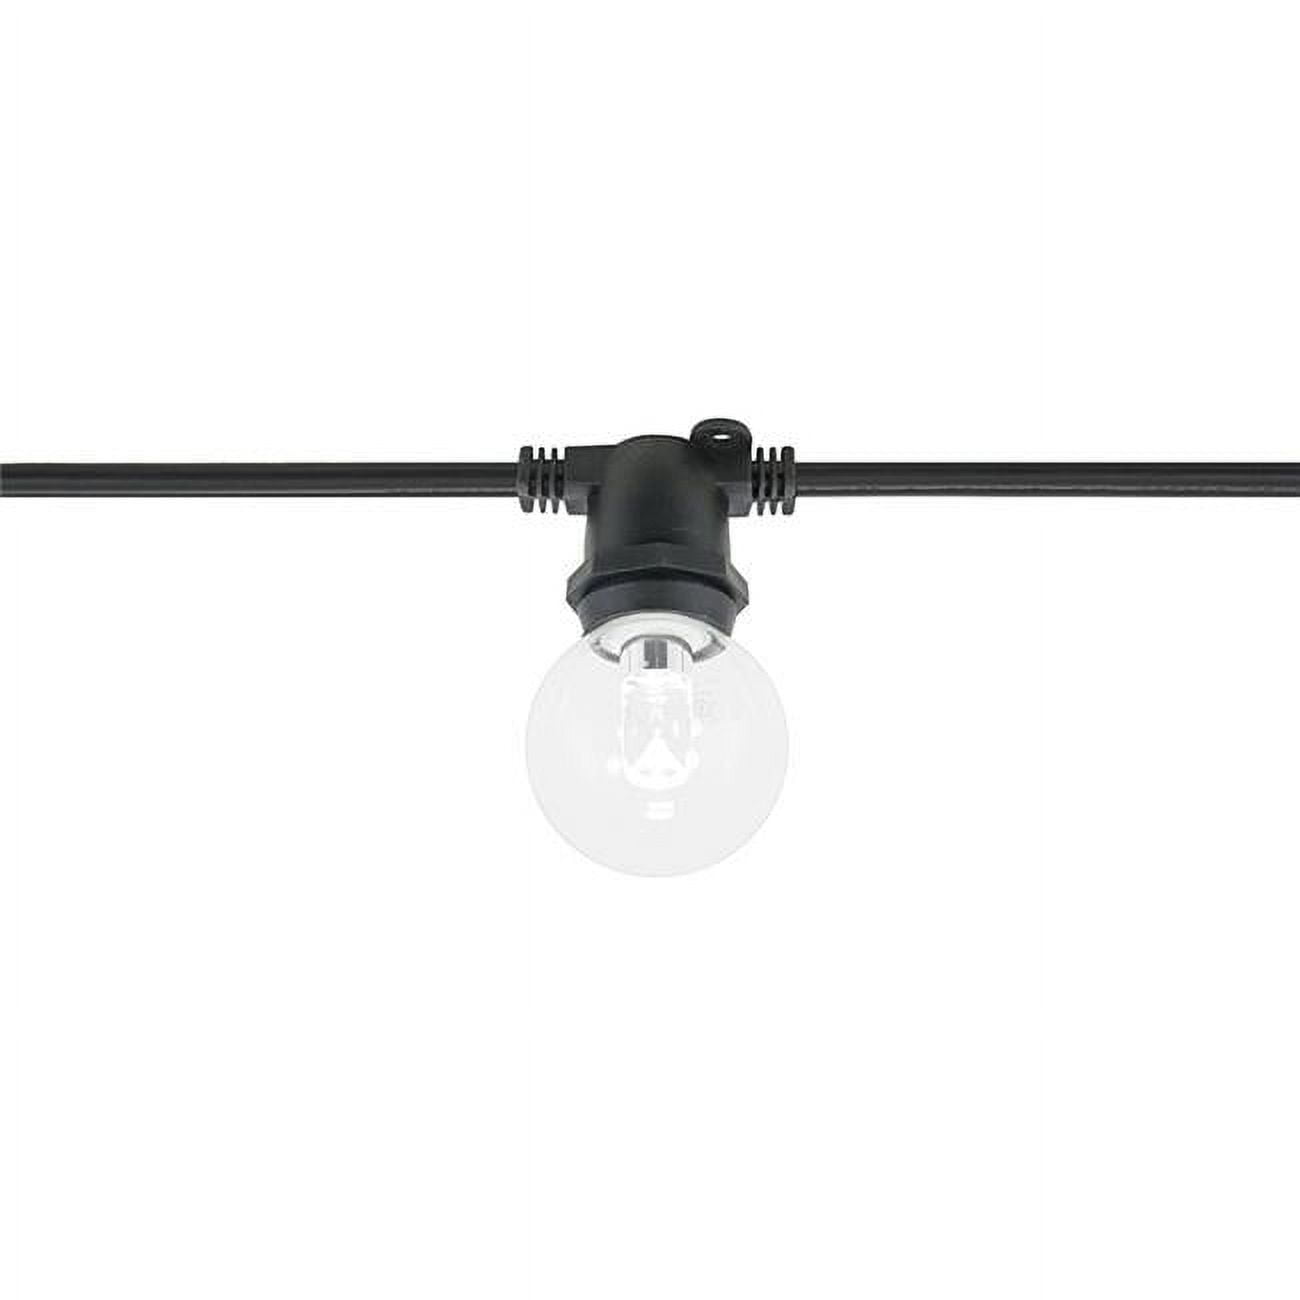 Ls-i-15-bk 330 Ft. Commercial Grade Light String With 264-intermediate Base Sockets, Black